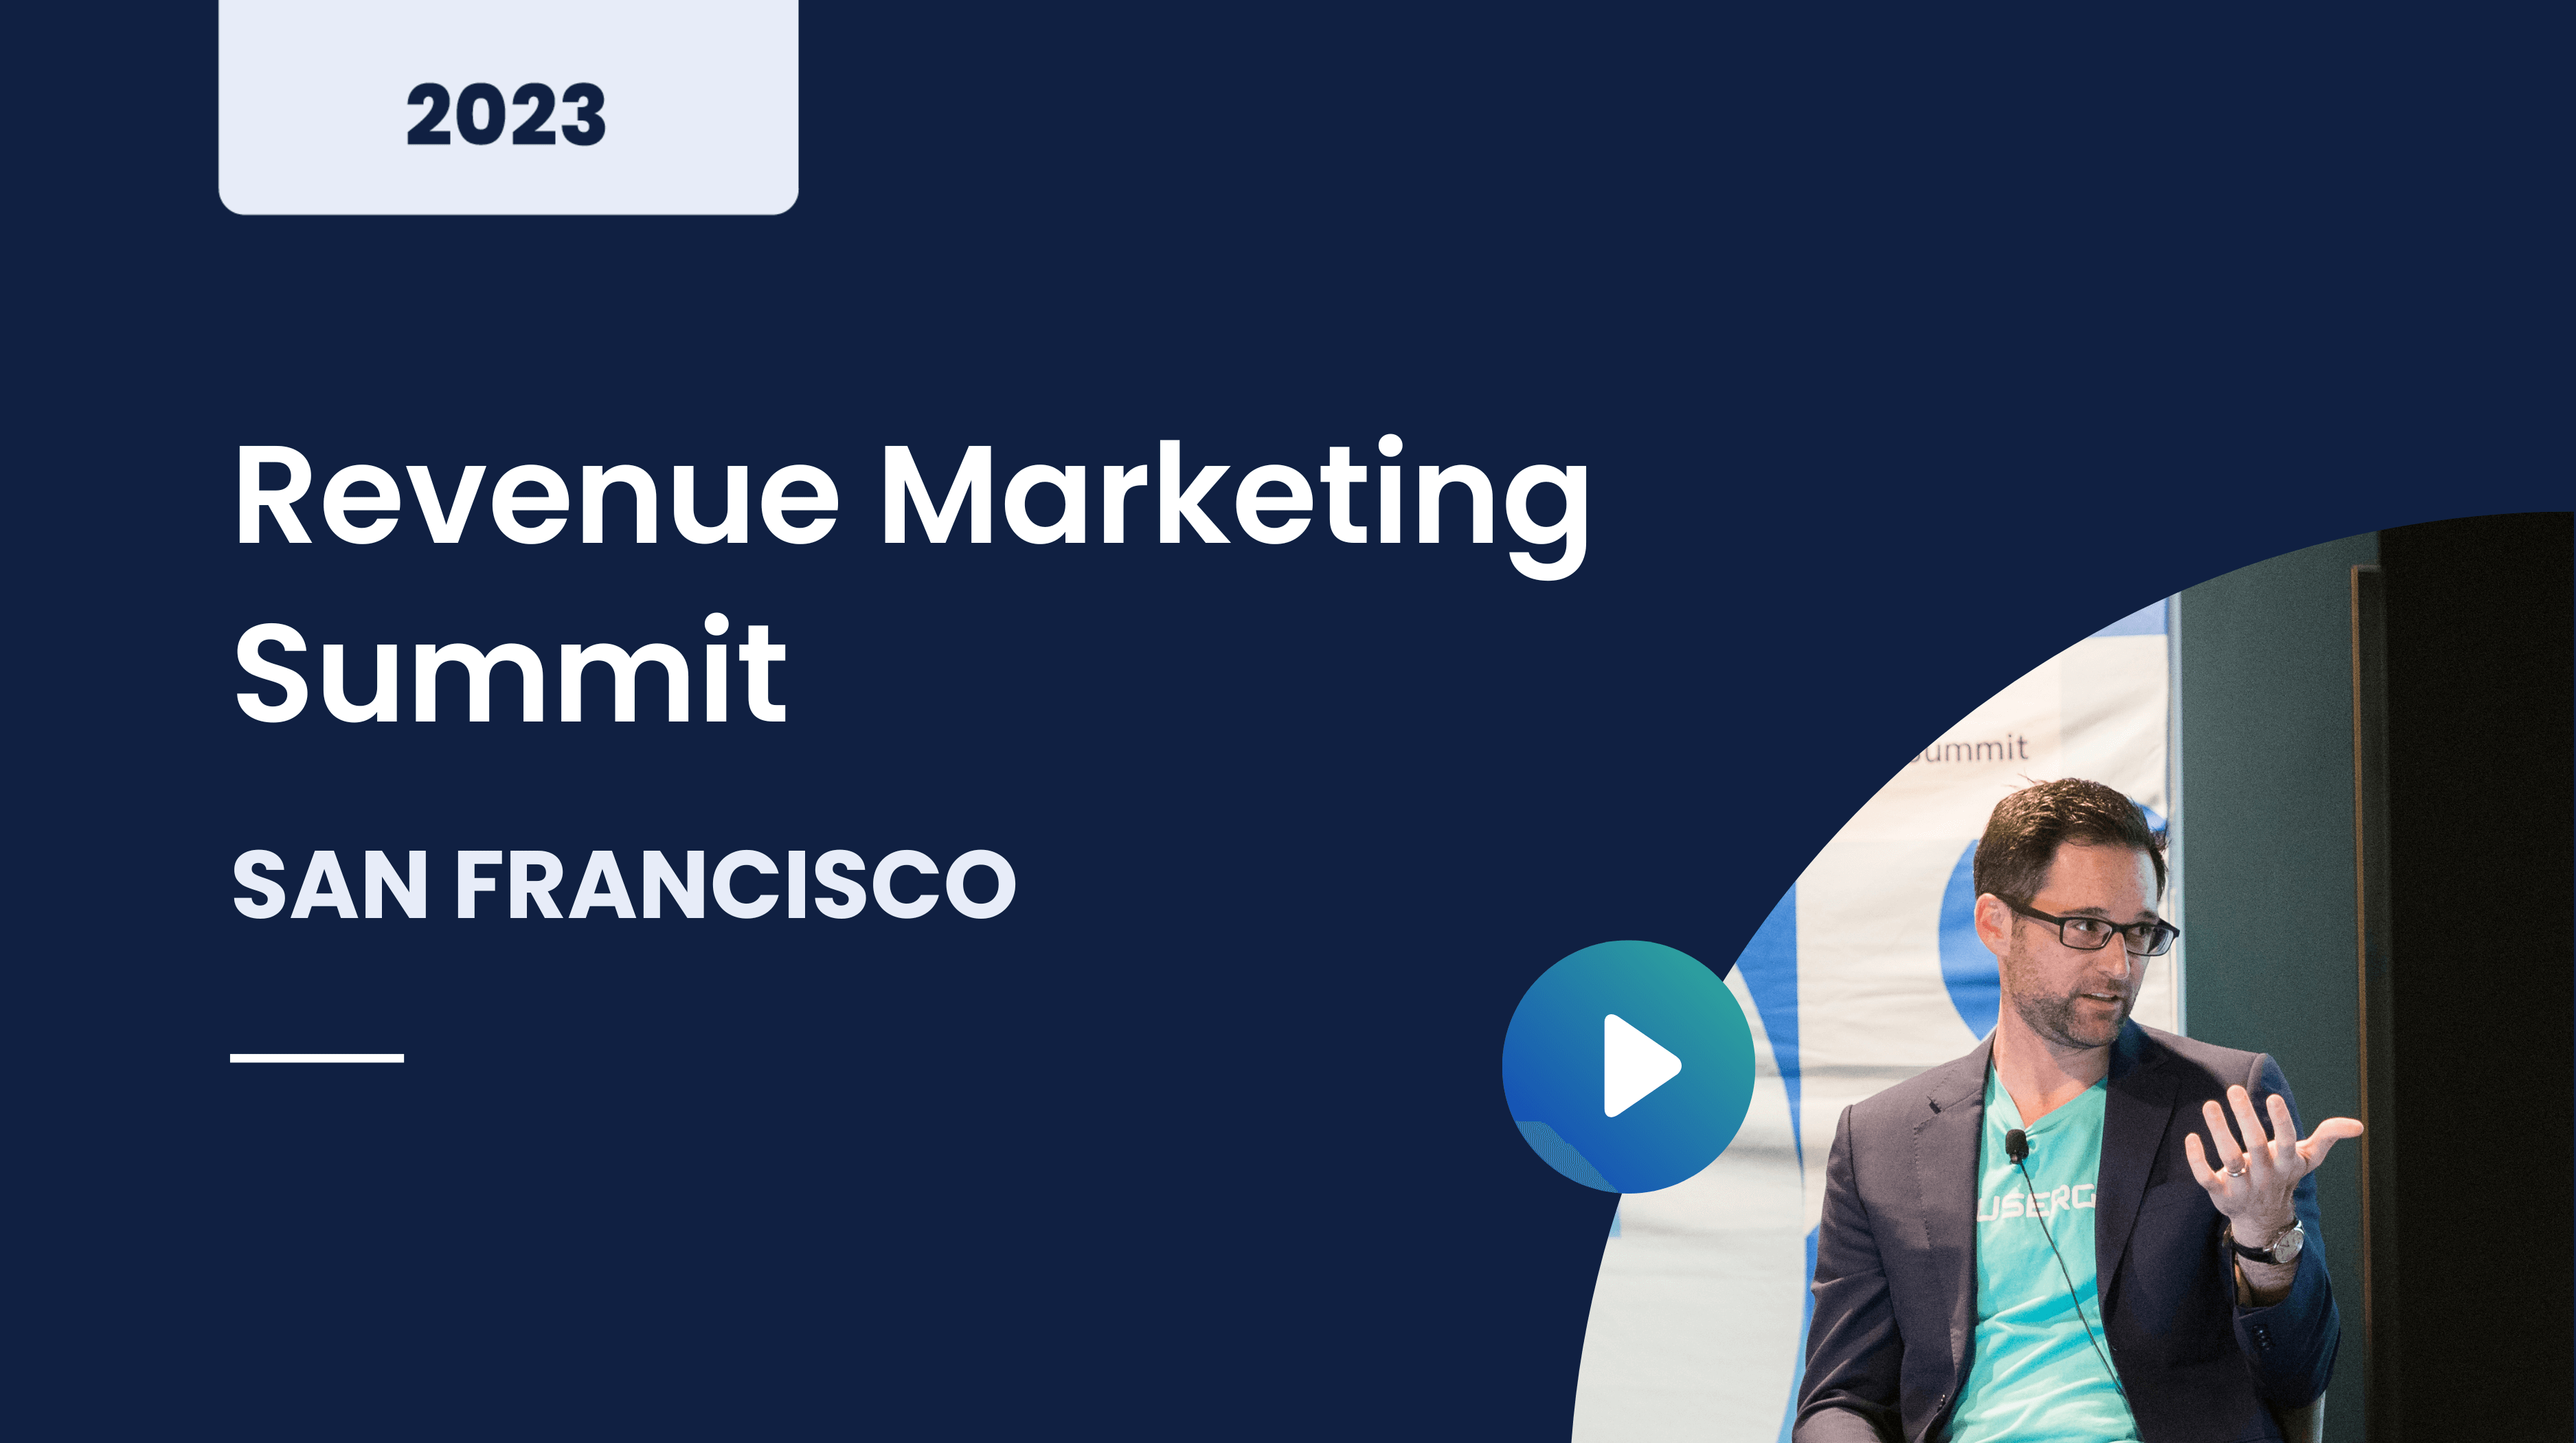 Revenue marketing summit San Francisco September 2023